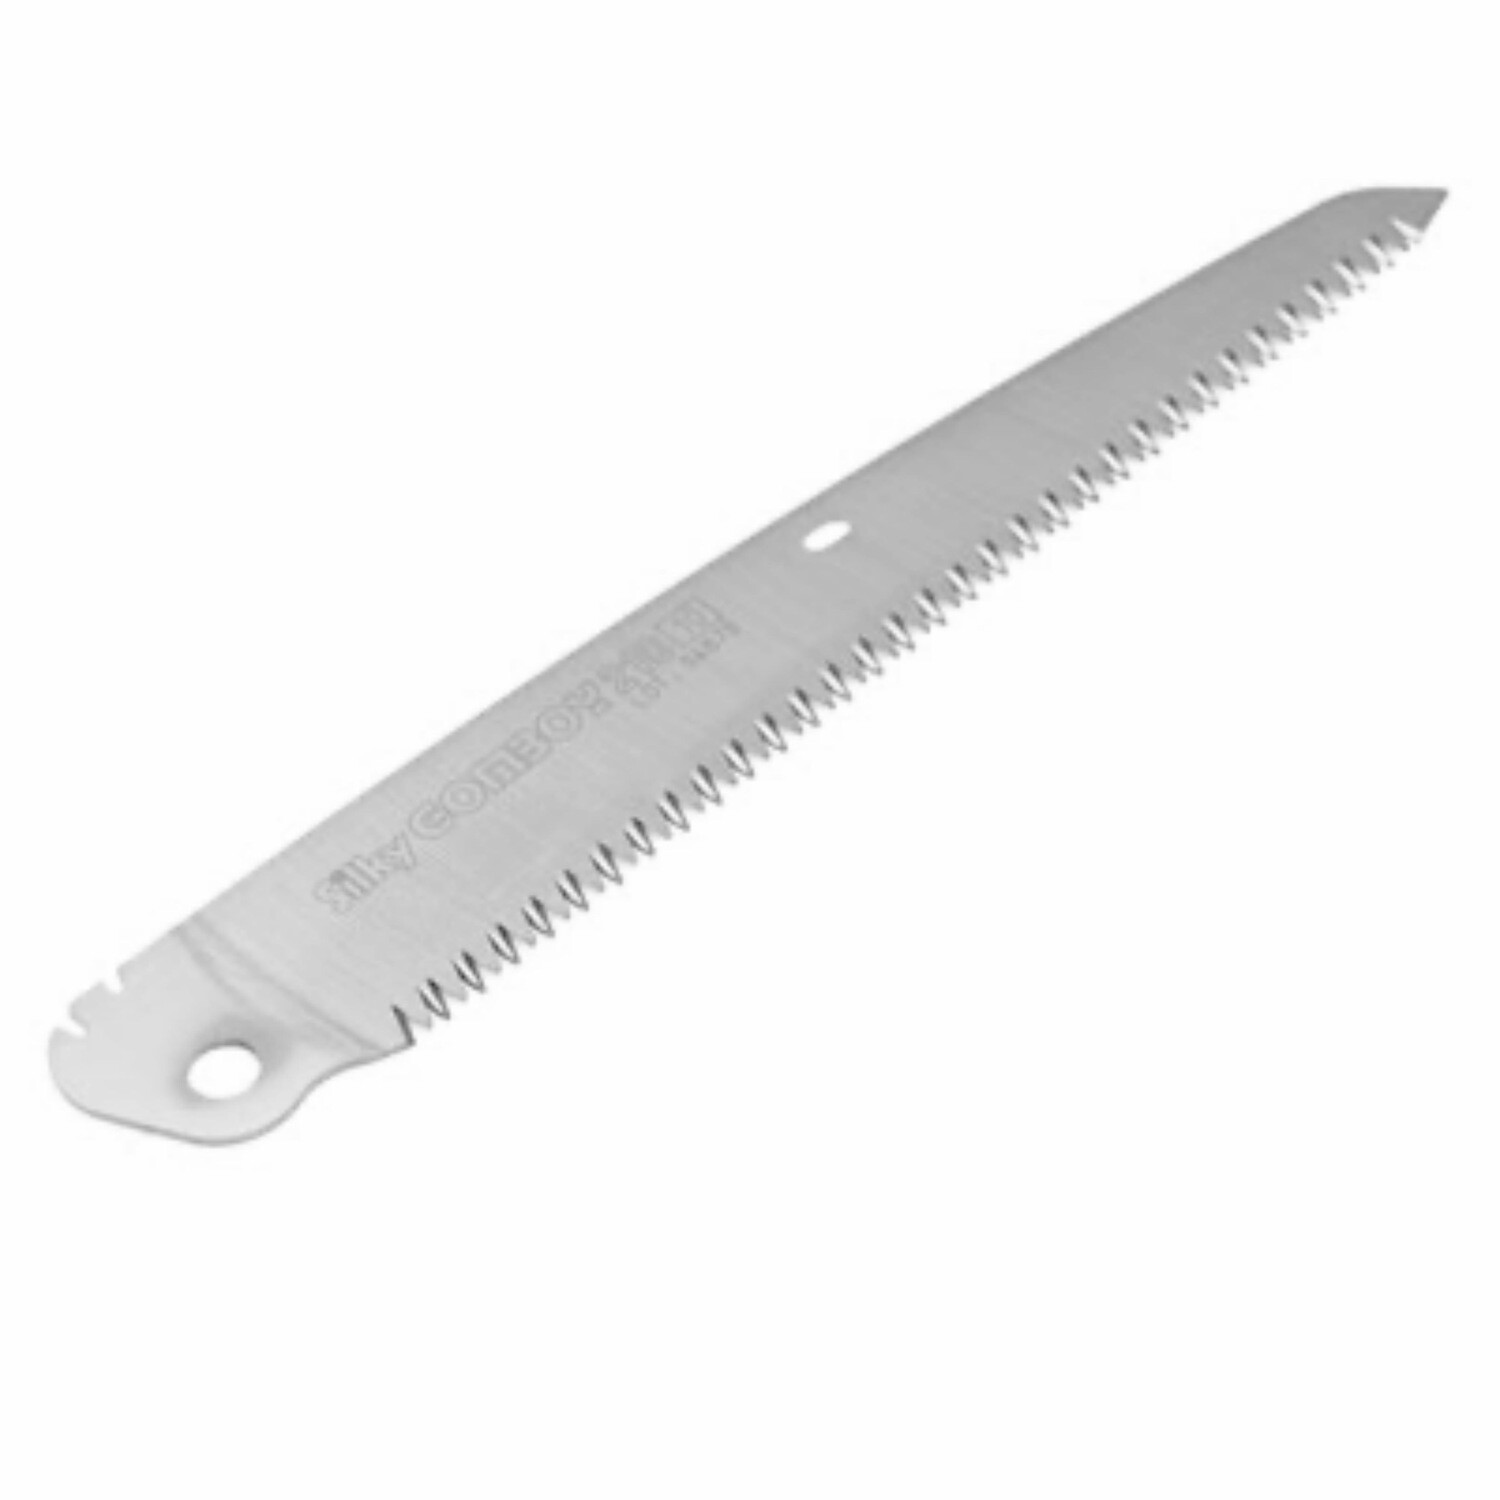 GOMBOY 270 (Fine Teeth) Extra blade